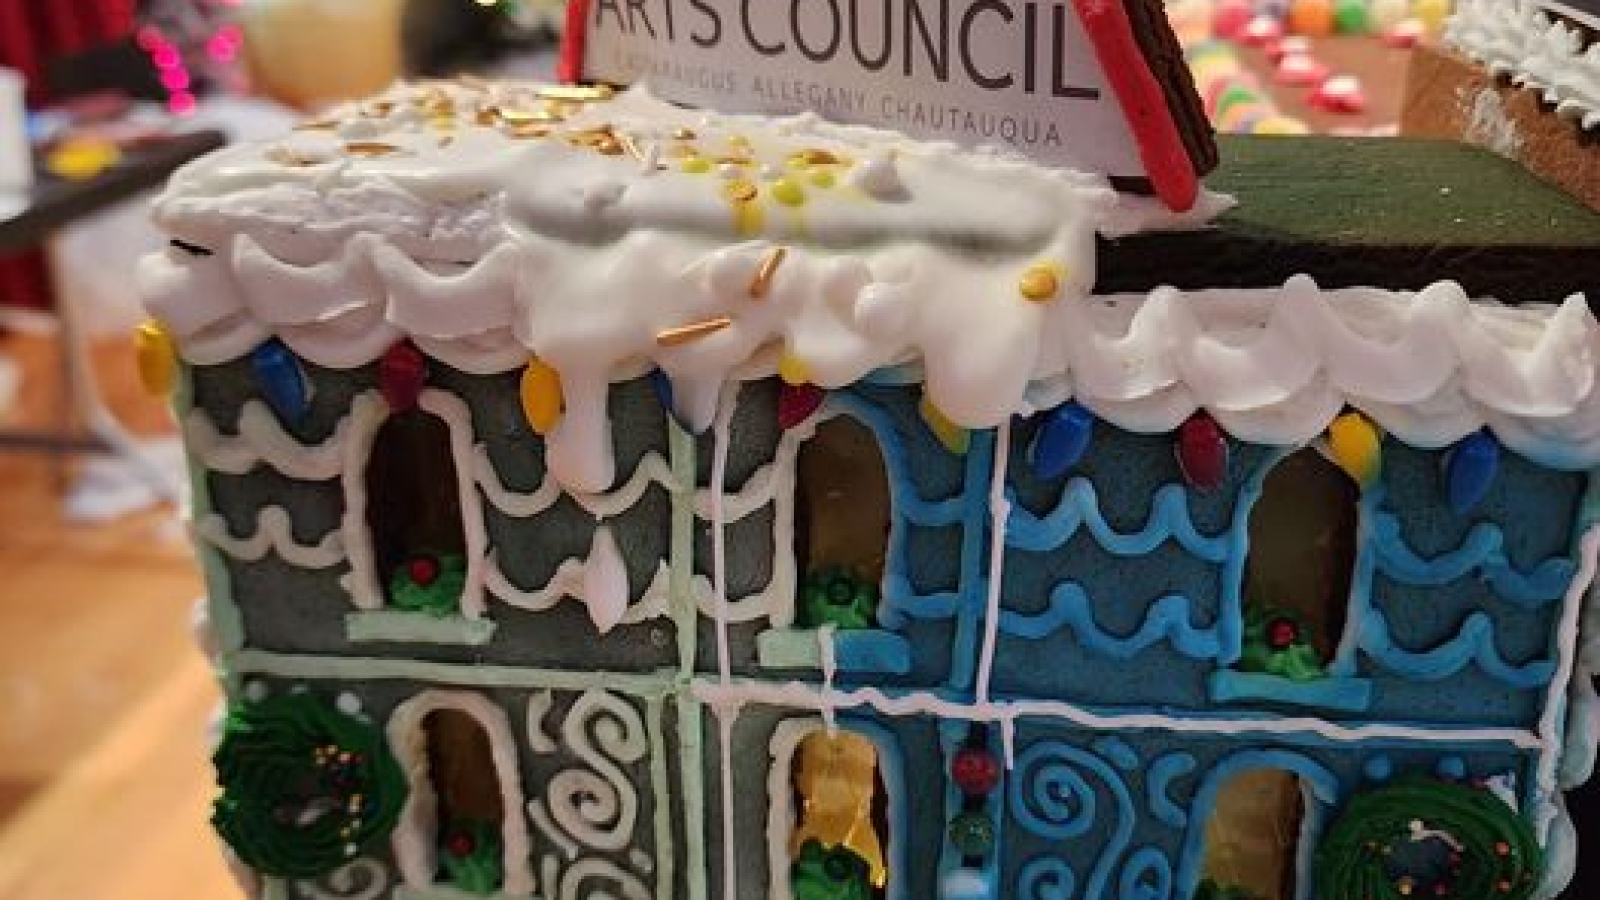 Arts Council as a Gingerbread house